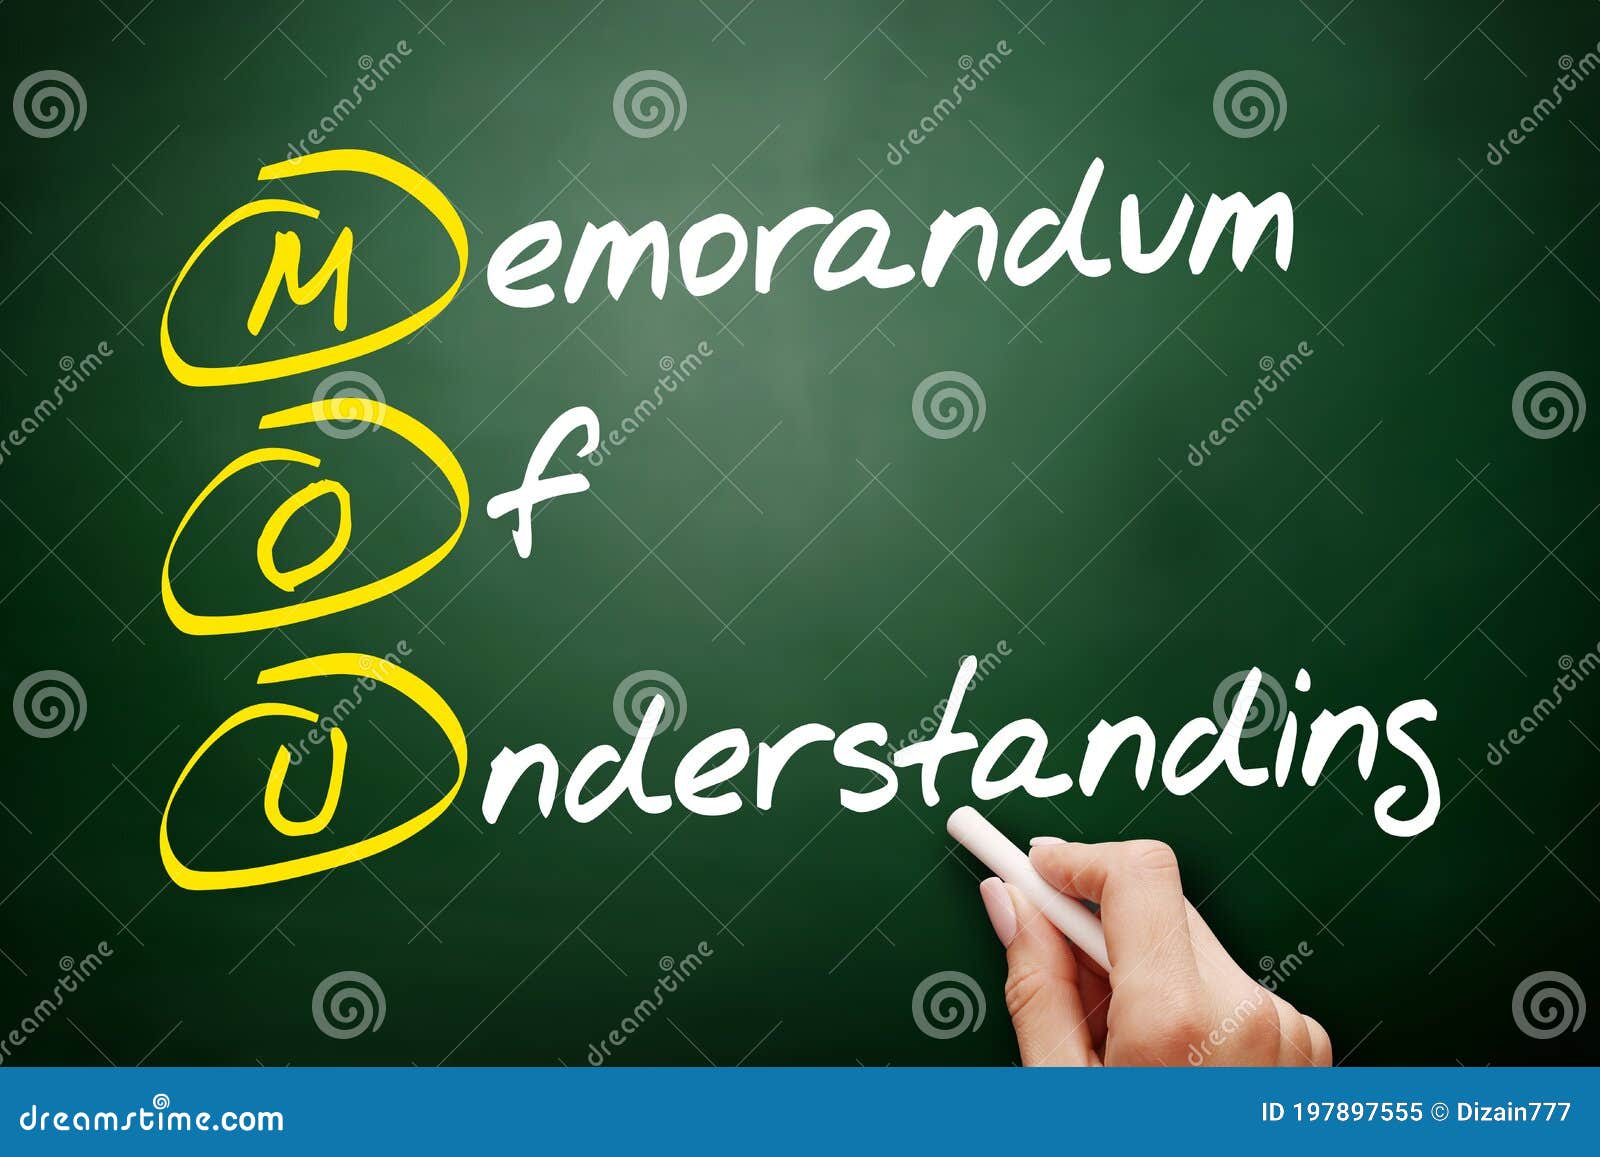 mou - memorandum of understanding acronym, business concept on blackboard